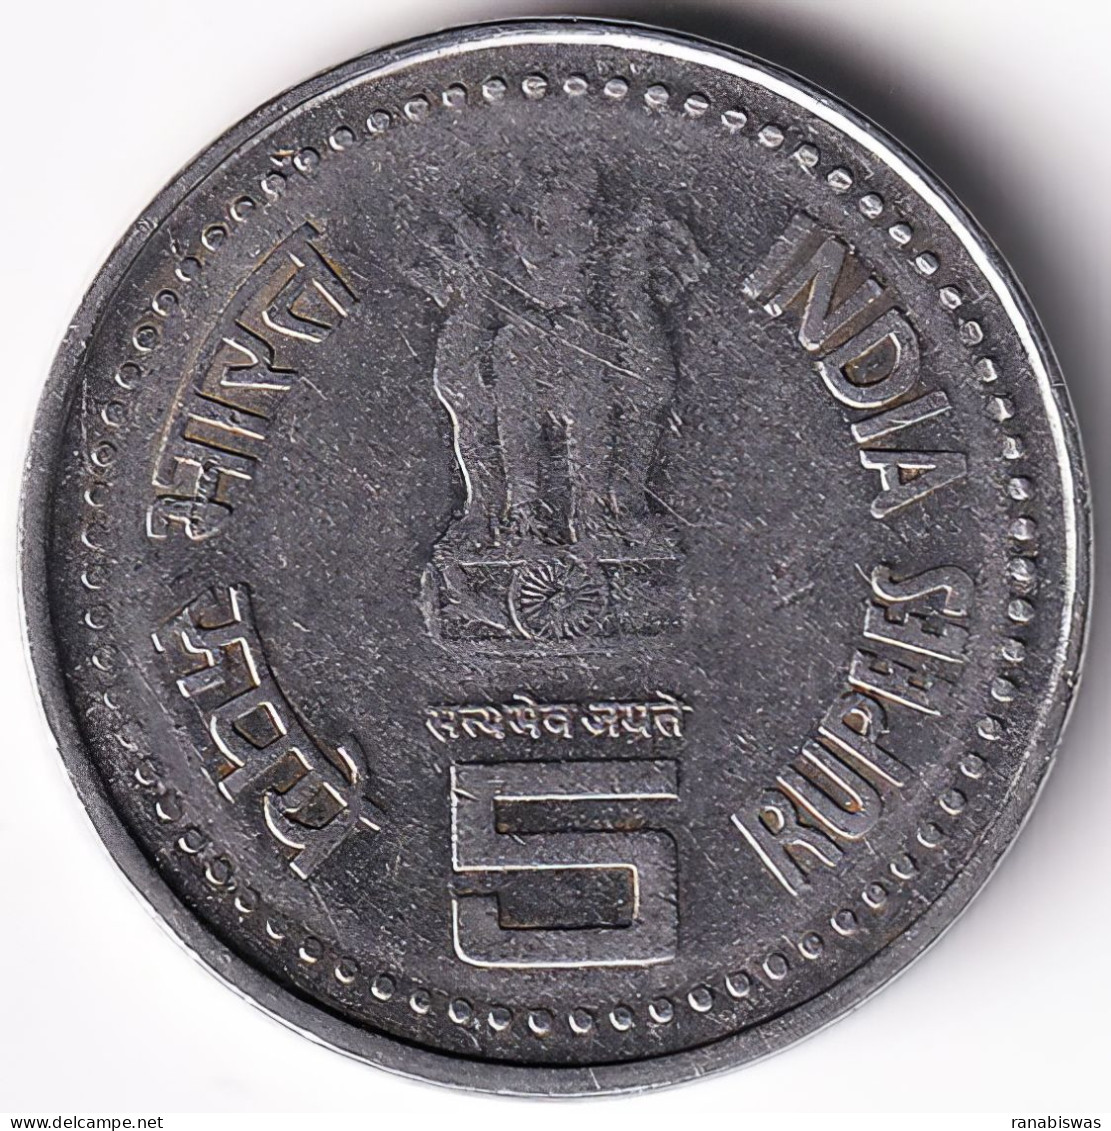 INDIA COIN LOT 141, 5 RUPEES 2006, NARAYAN GURUDEV, BOMBAY MINT, XF - Indien